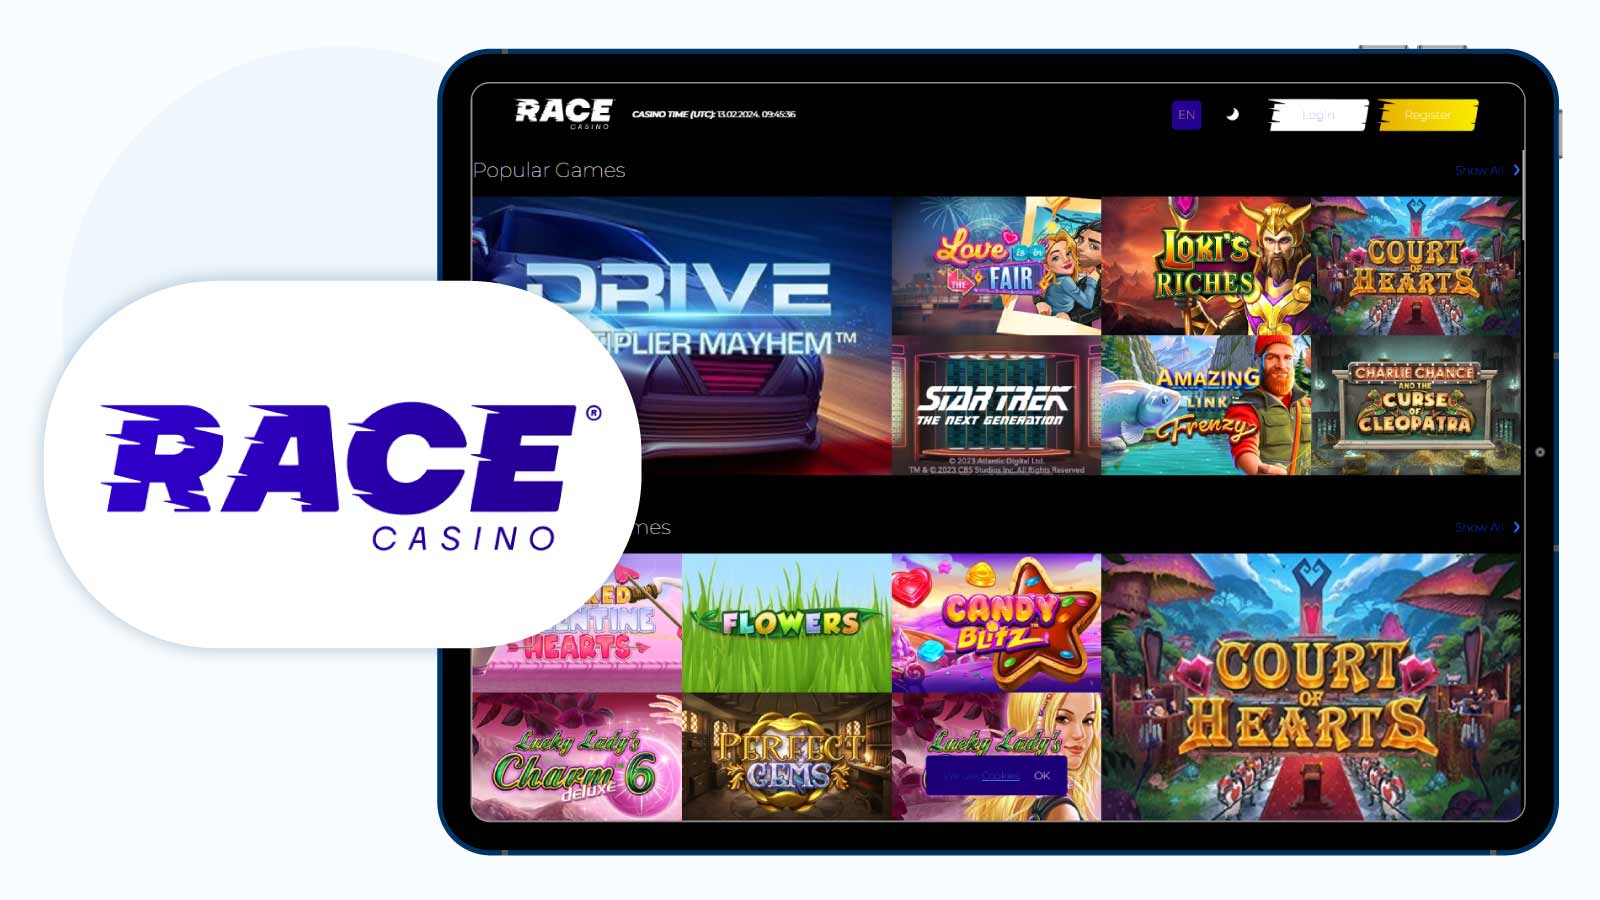 Race Casino – runner-up new L&L Europe casino